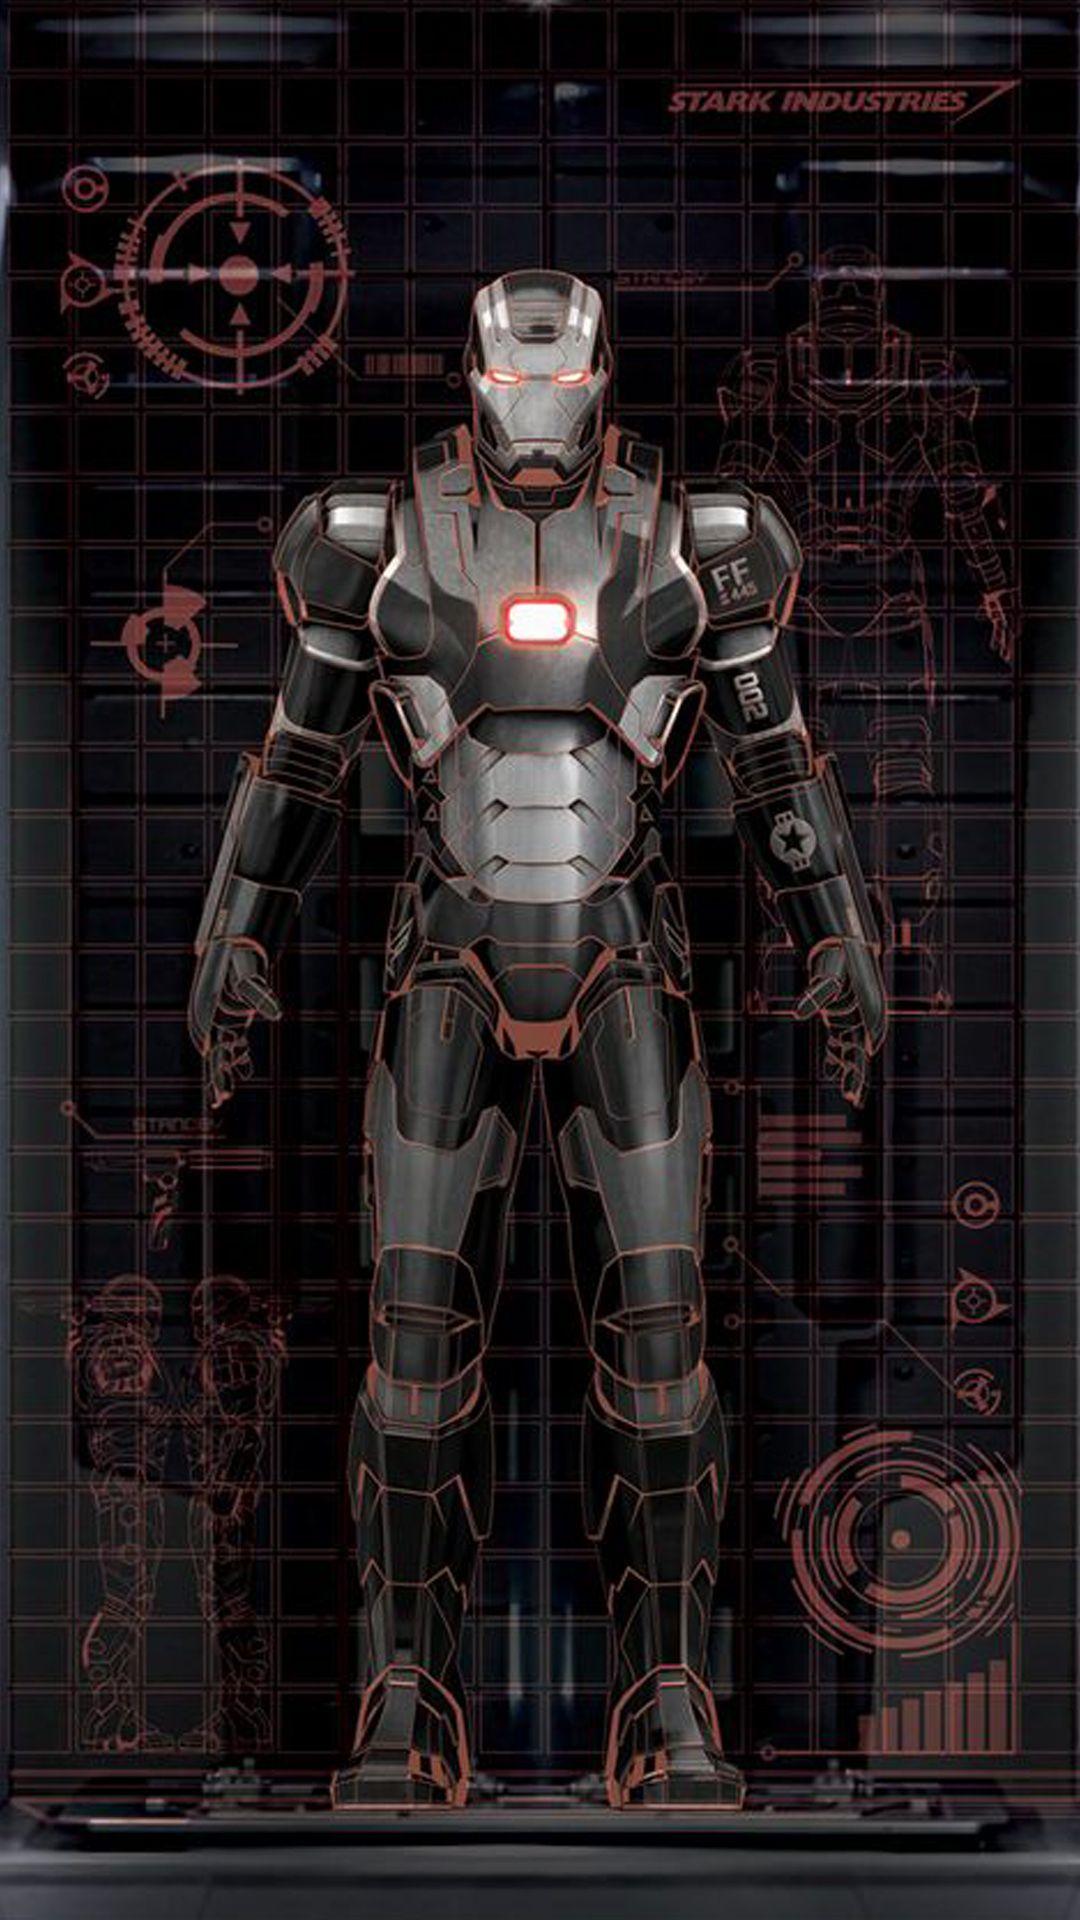 Iron Man Wallpaper Iron Man 8 bit iphone background windows